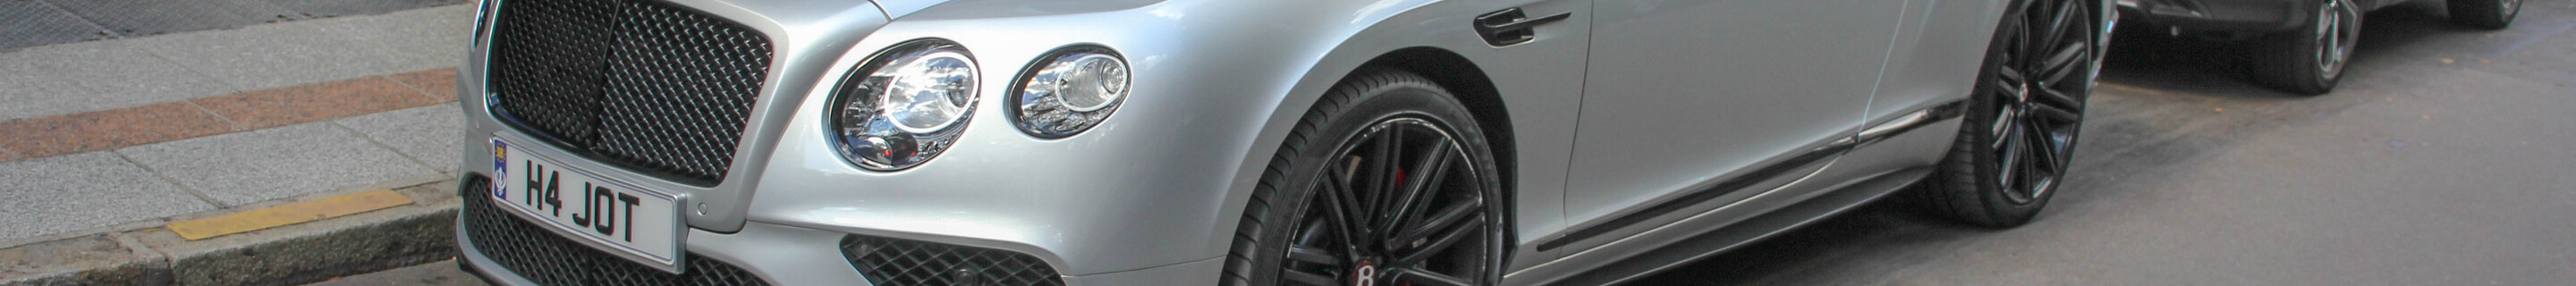 Bentley Continental GT V8 S Black Edition 2016